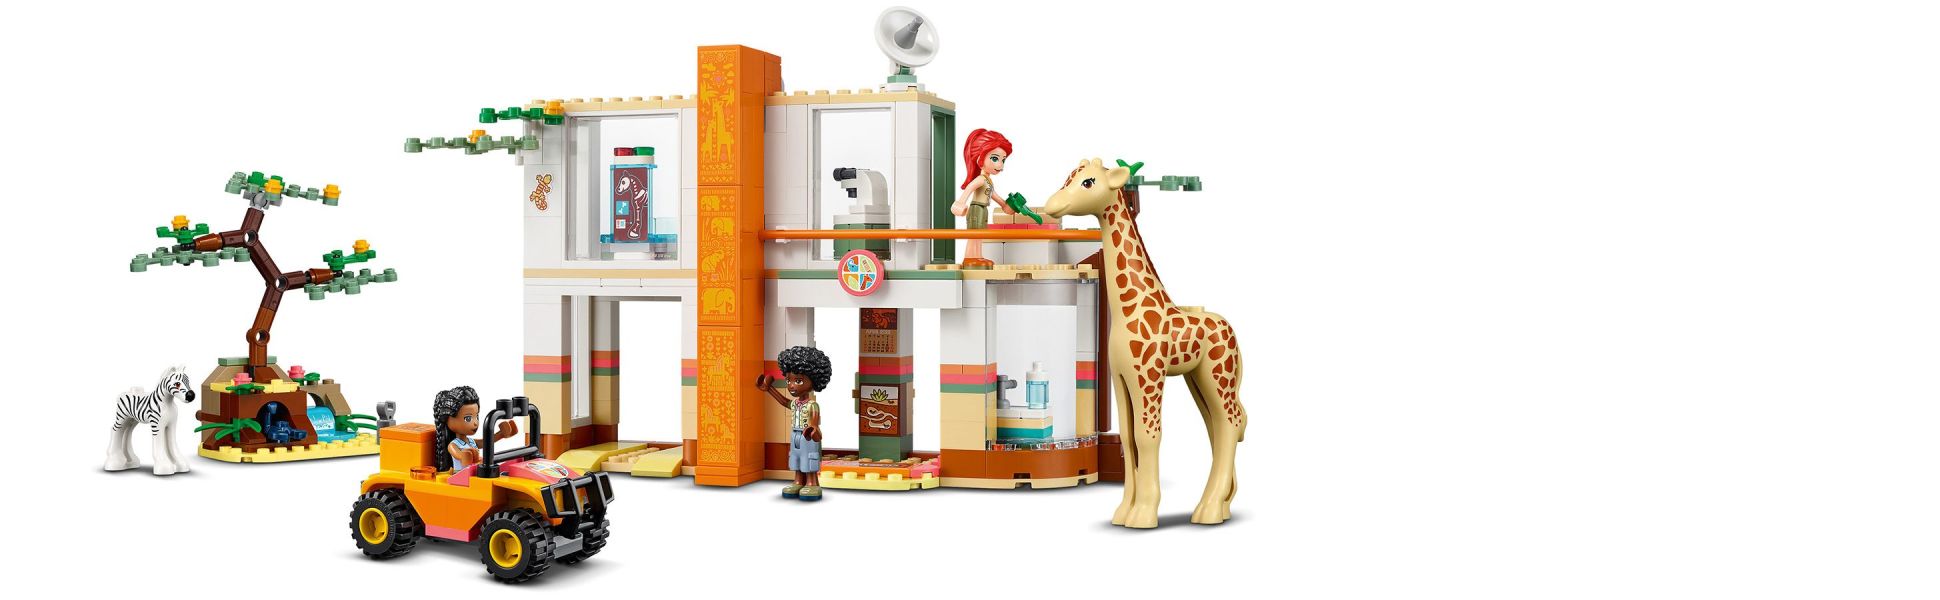 Toy Figures and Friends Girls Gift Giraffe 3 Idea Rescue 7 41717 Safari Animal with Old Years Zebra Wildlife Dolls, Mia\'s Age Boys for LEGO Plus Birthday & Kids, Mini plus